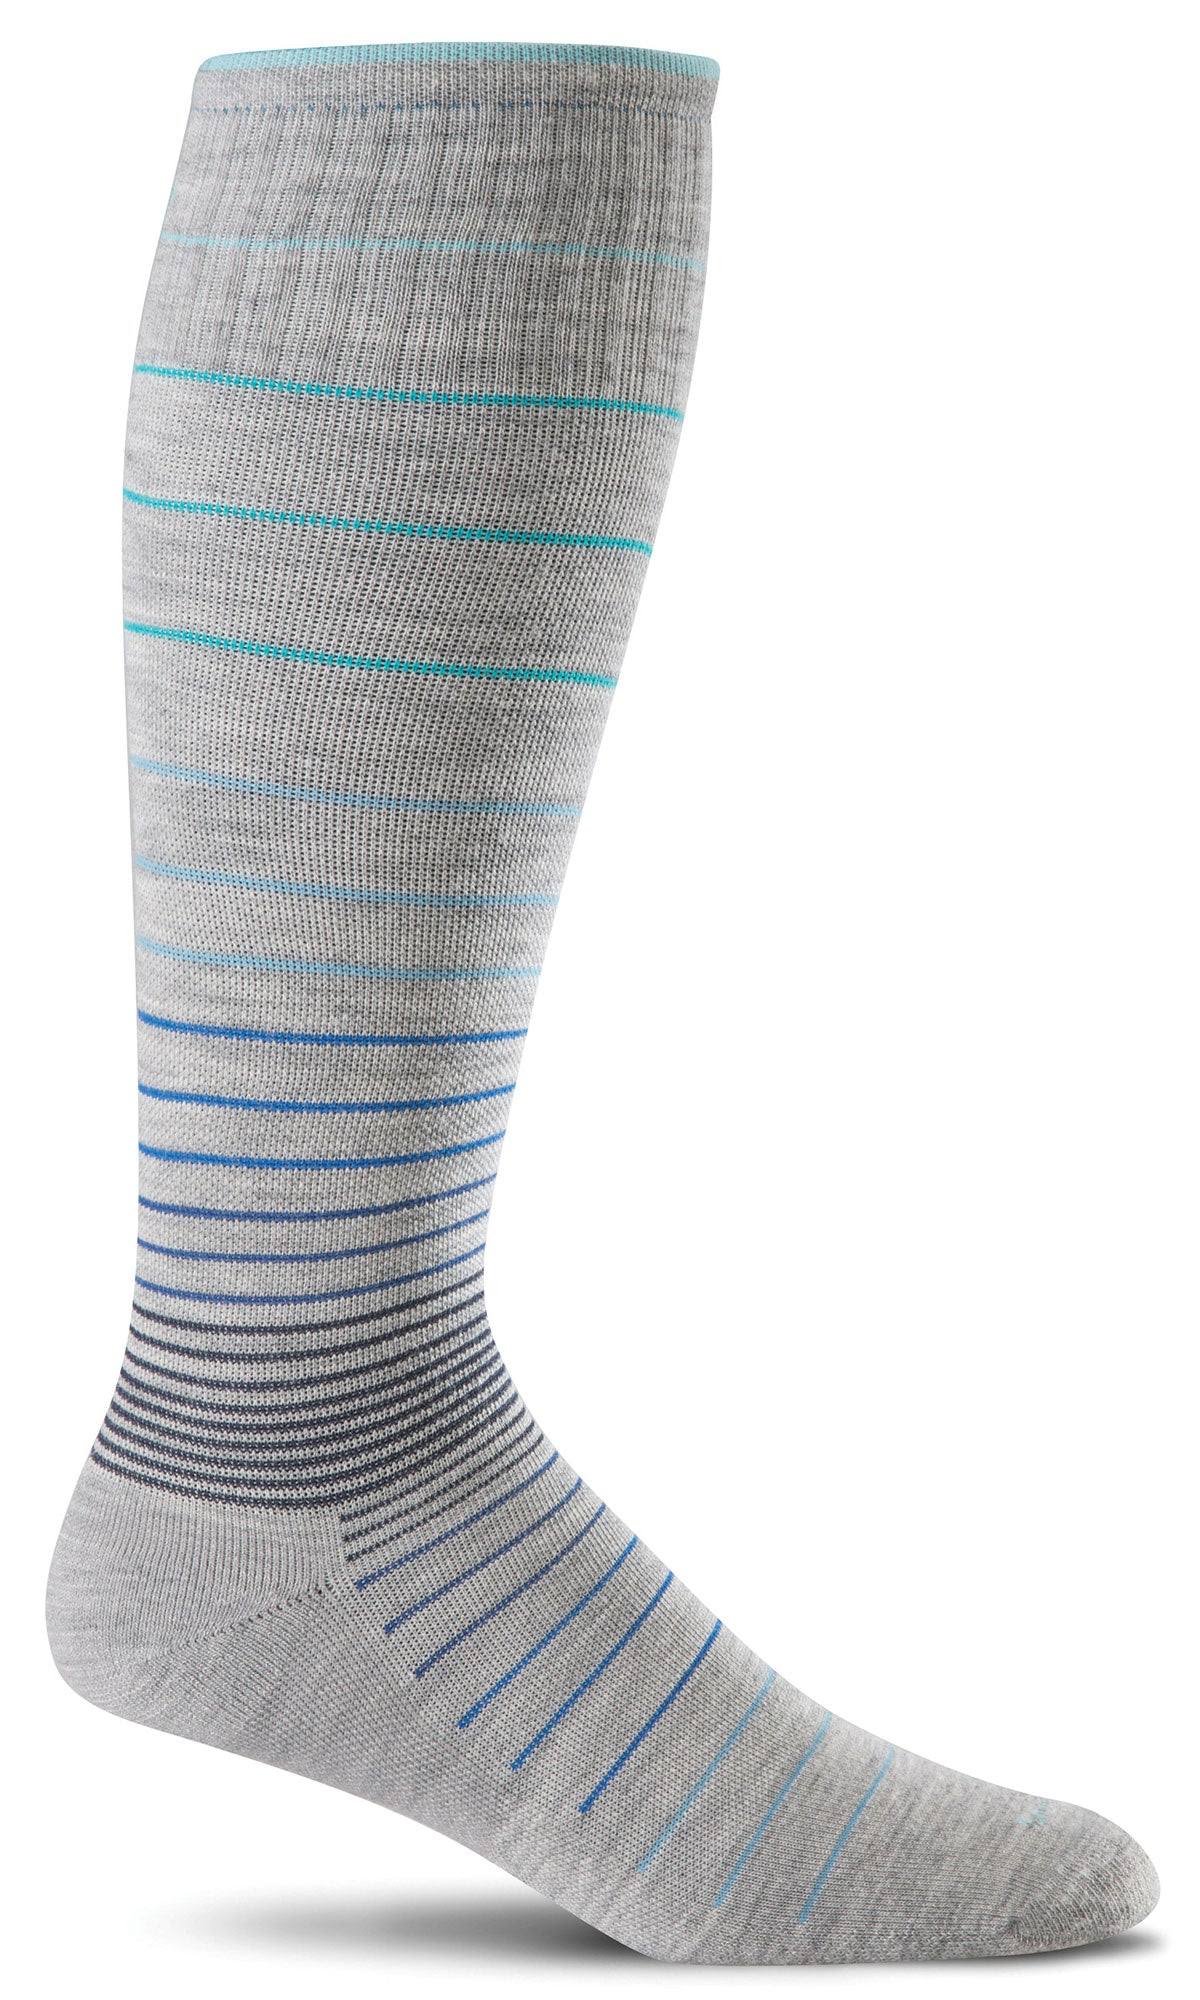 Sockwell Womens Circulator Compression Socks - Small-Medium, Black Stripes